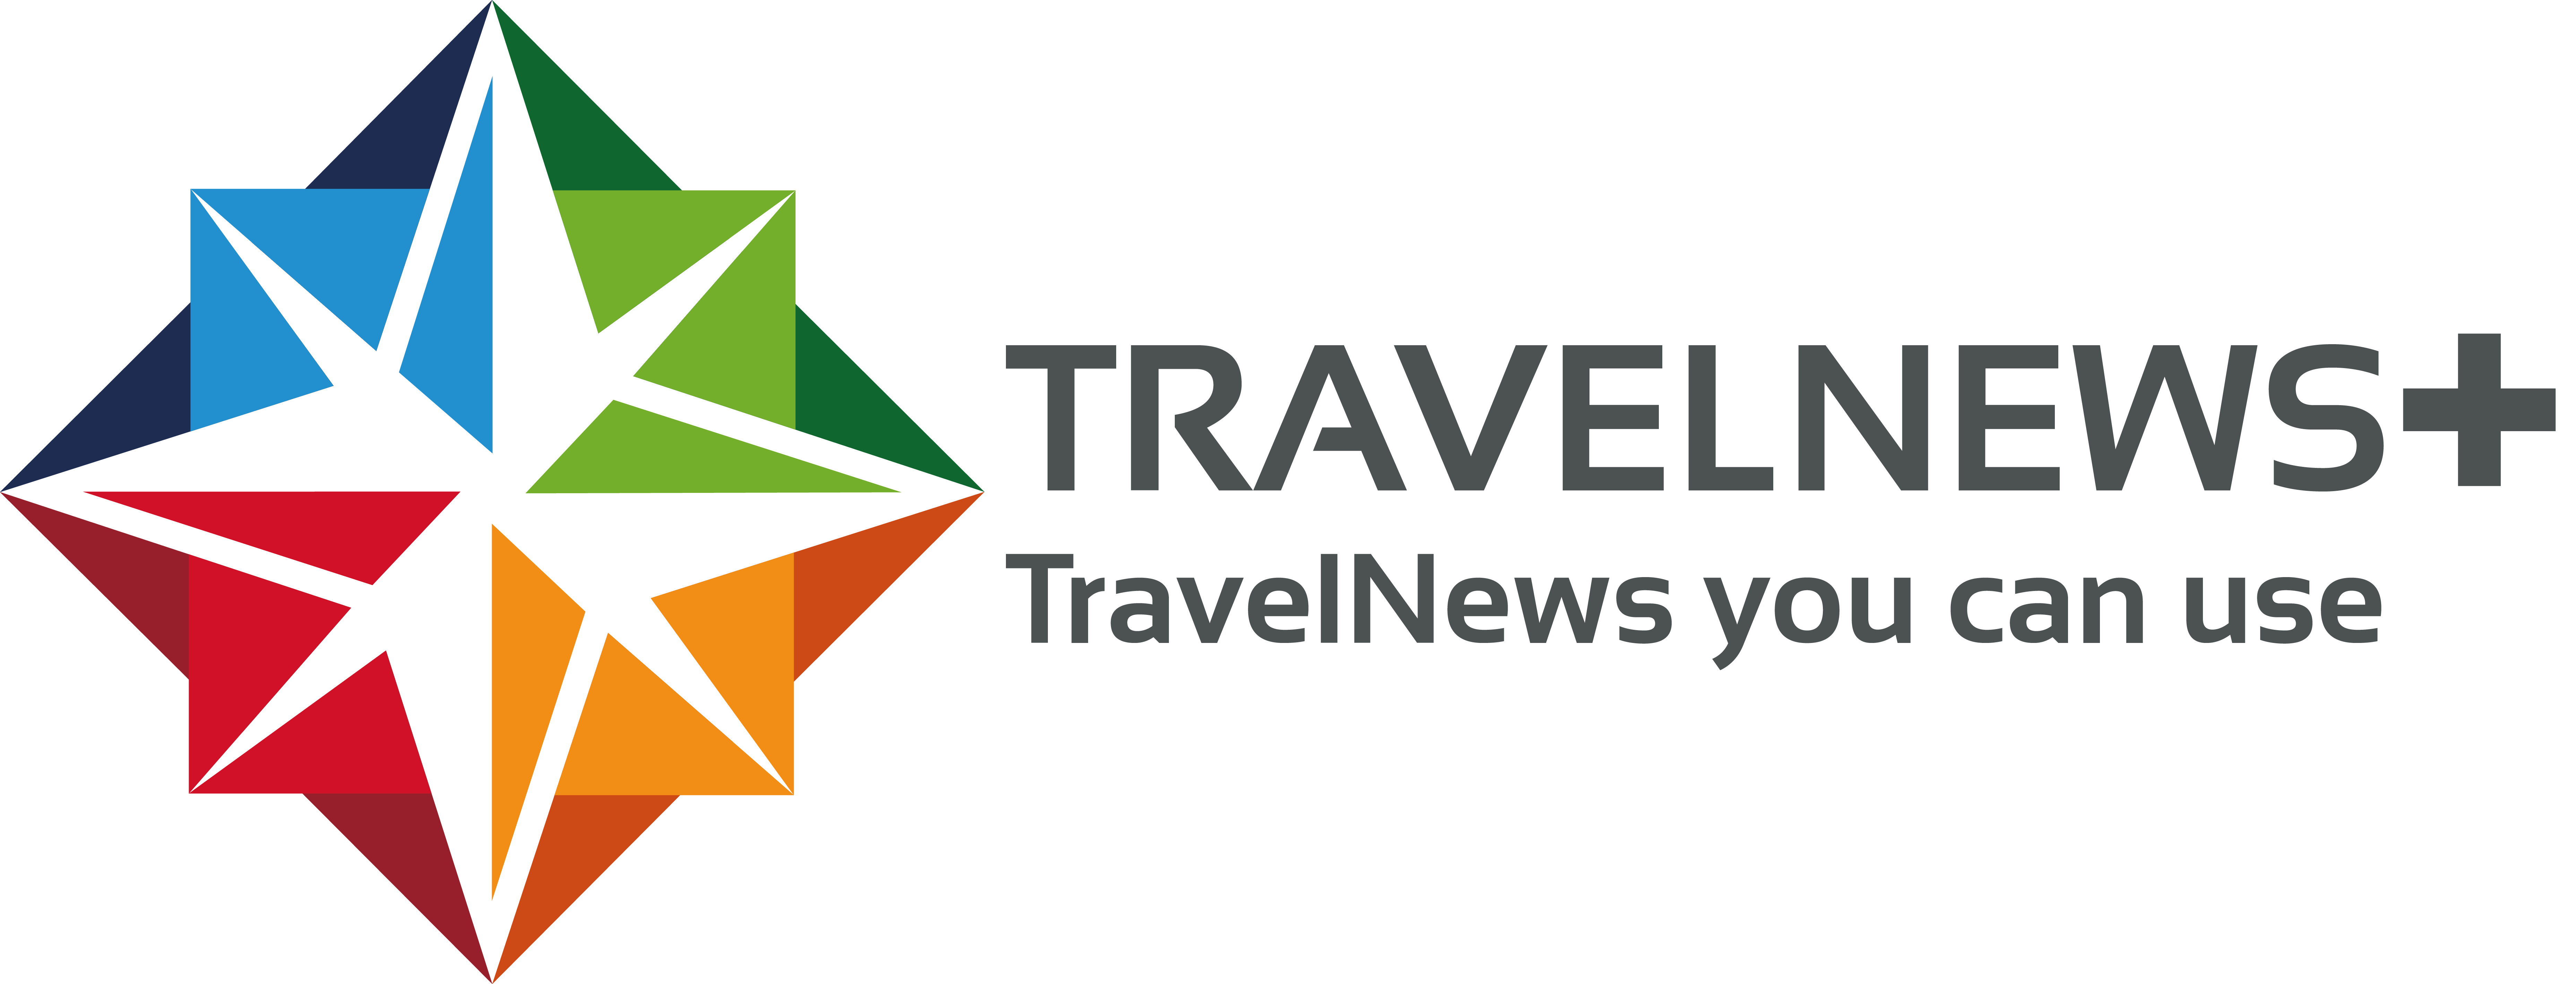 Travelnewsplus